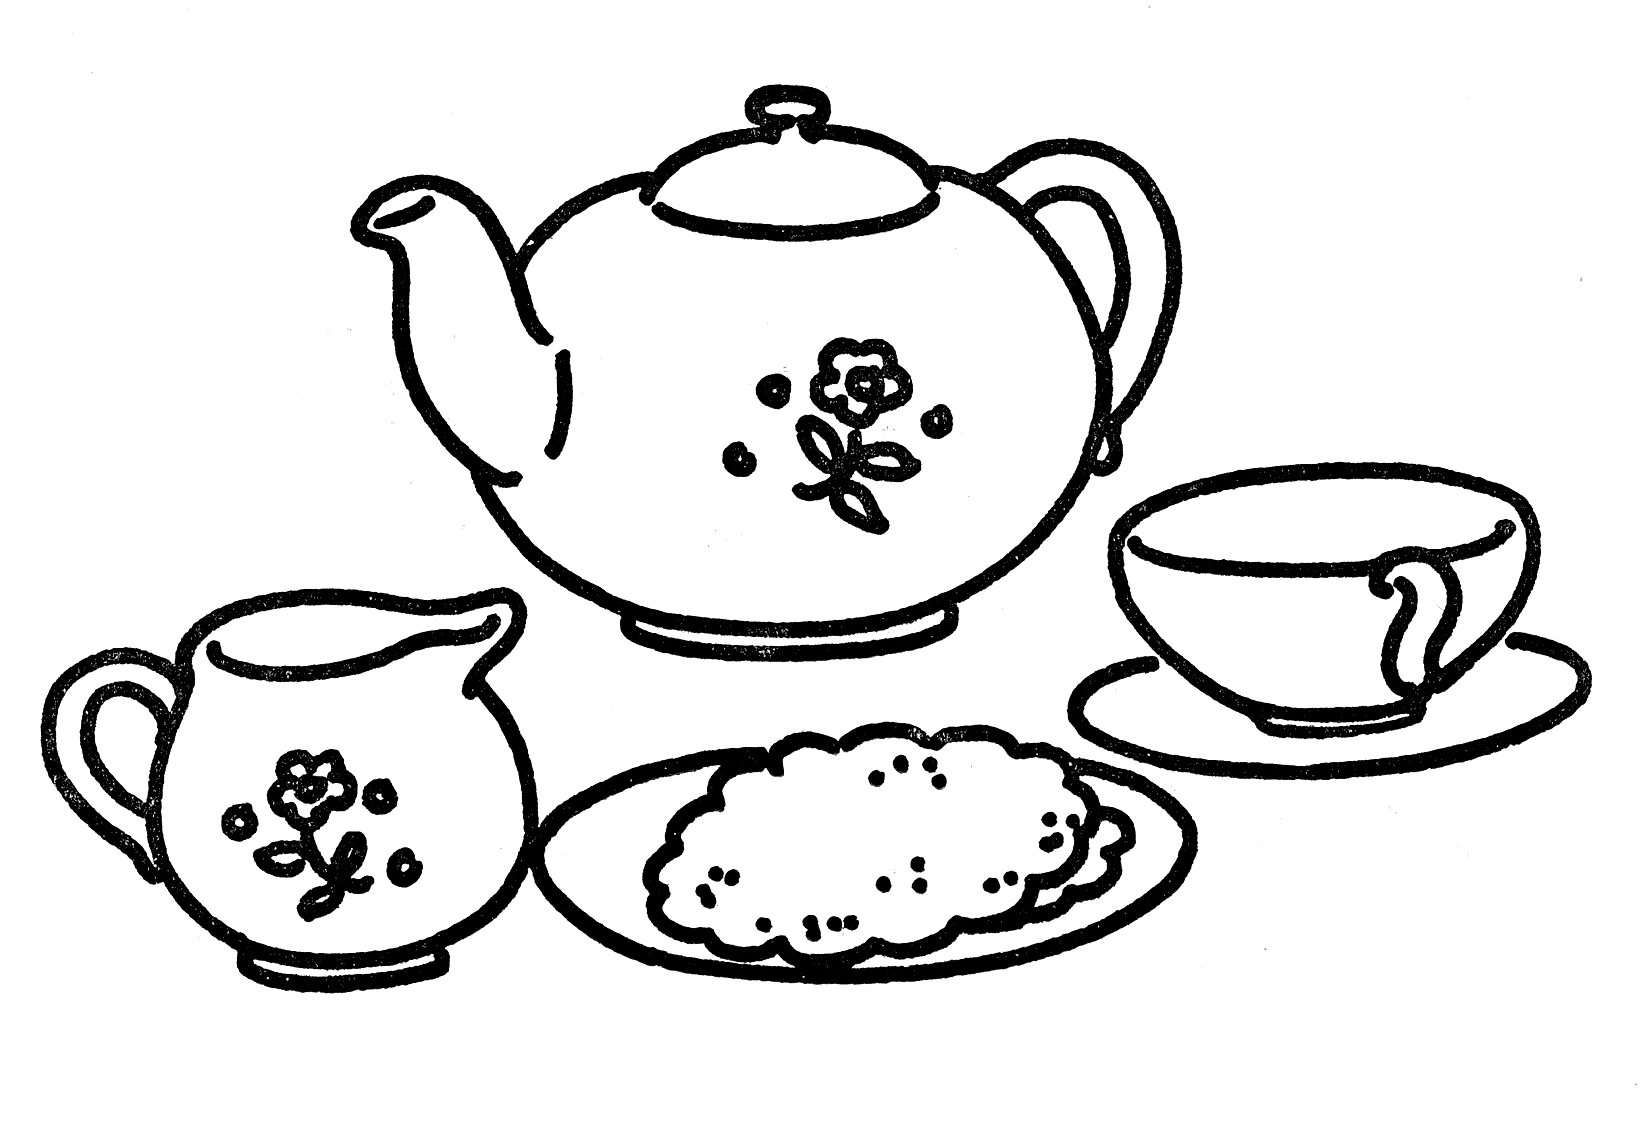 Download Line Art Tea Set - The Graphics Fairy